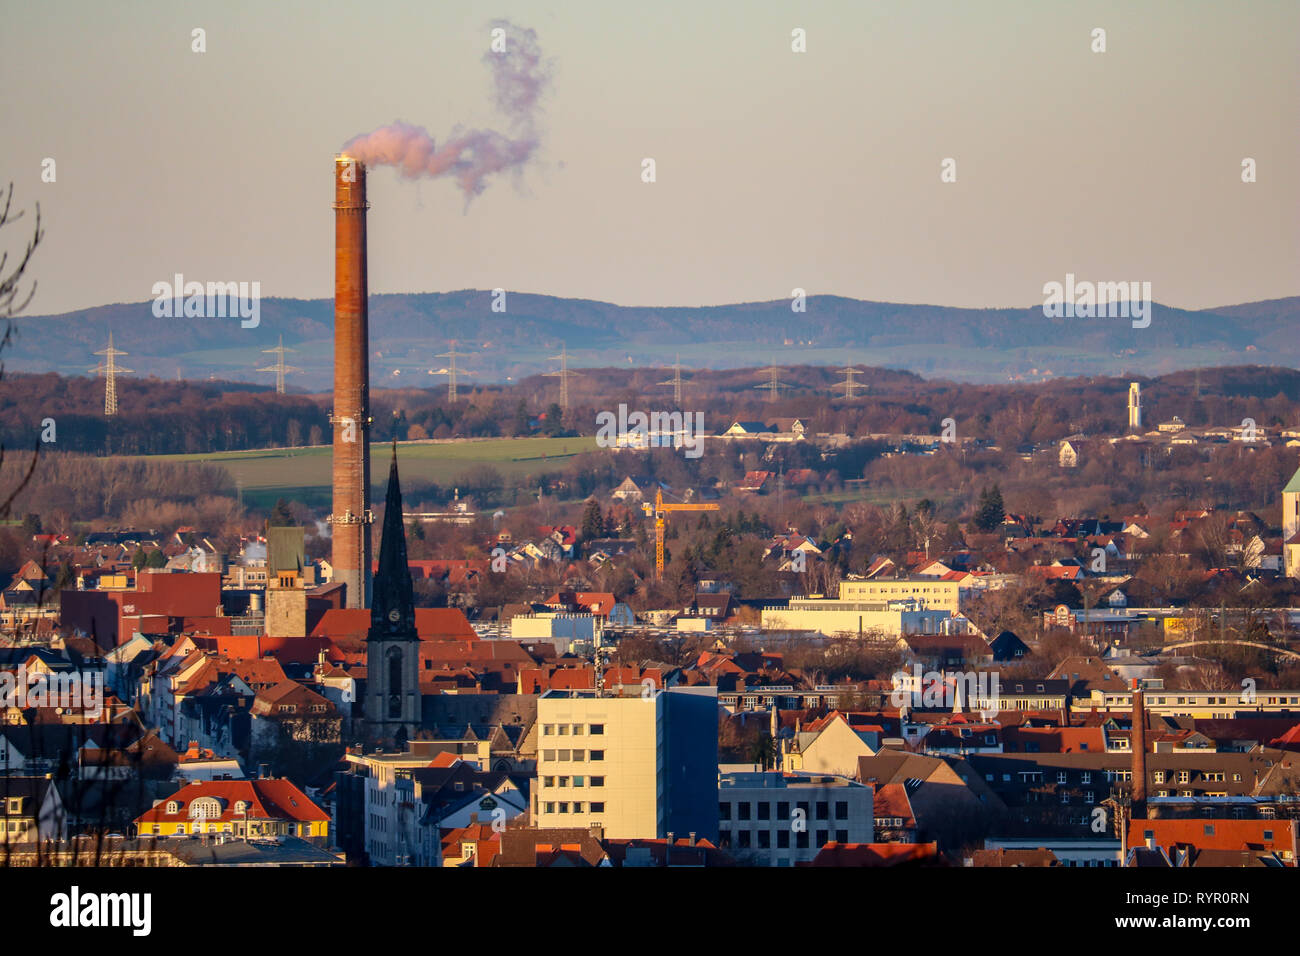 Panorama of Bielefeld, Germany with a smoking Chimney Stock Photo